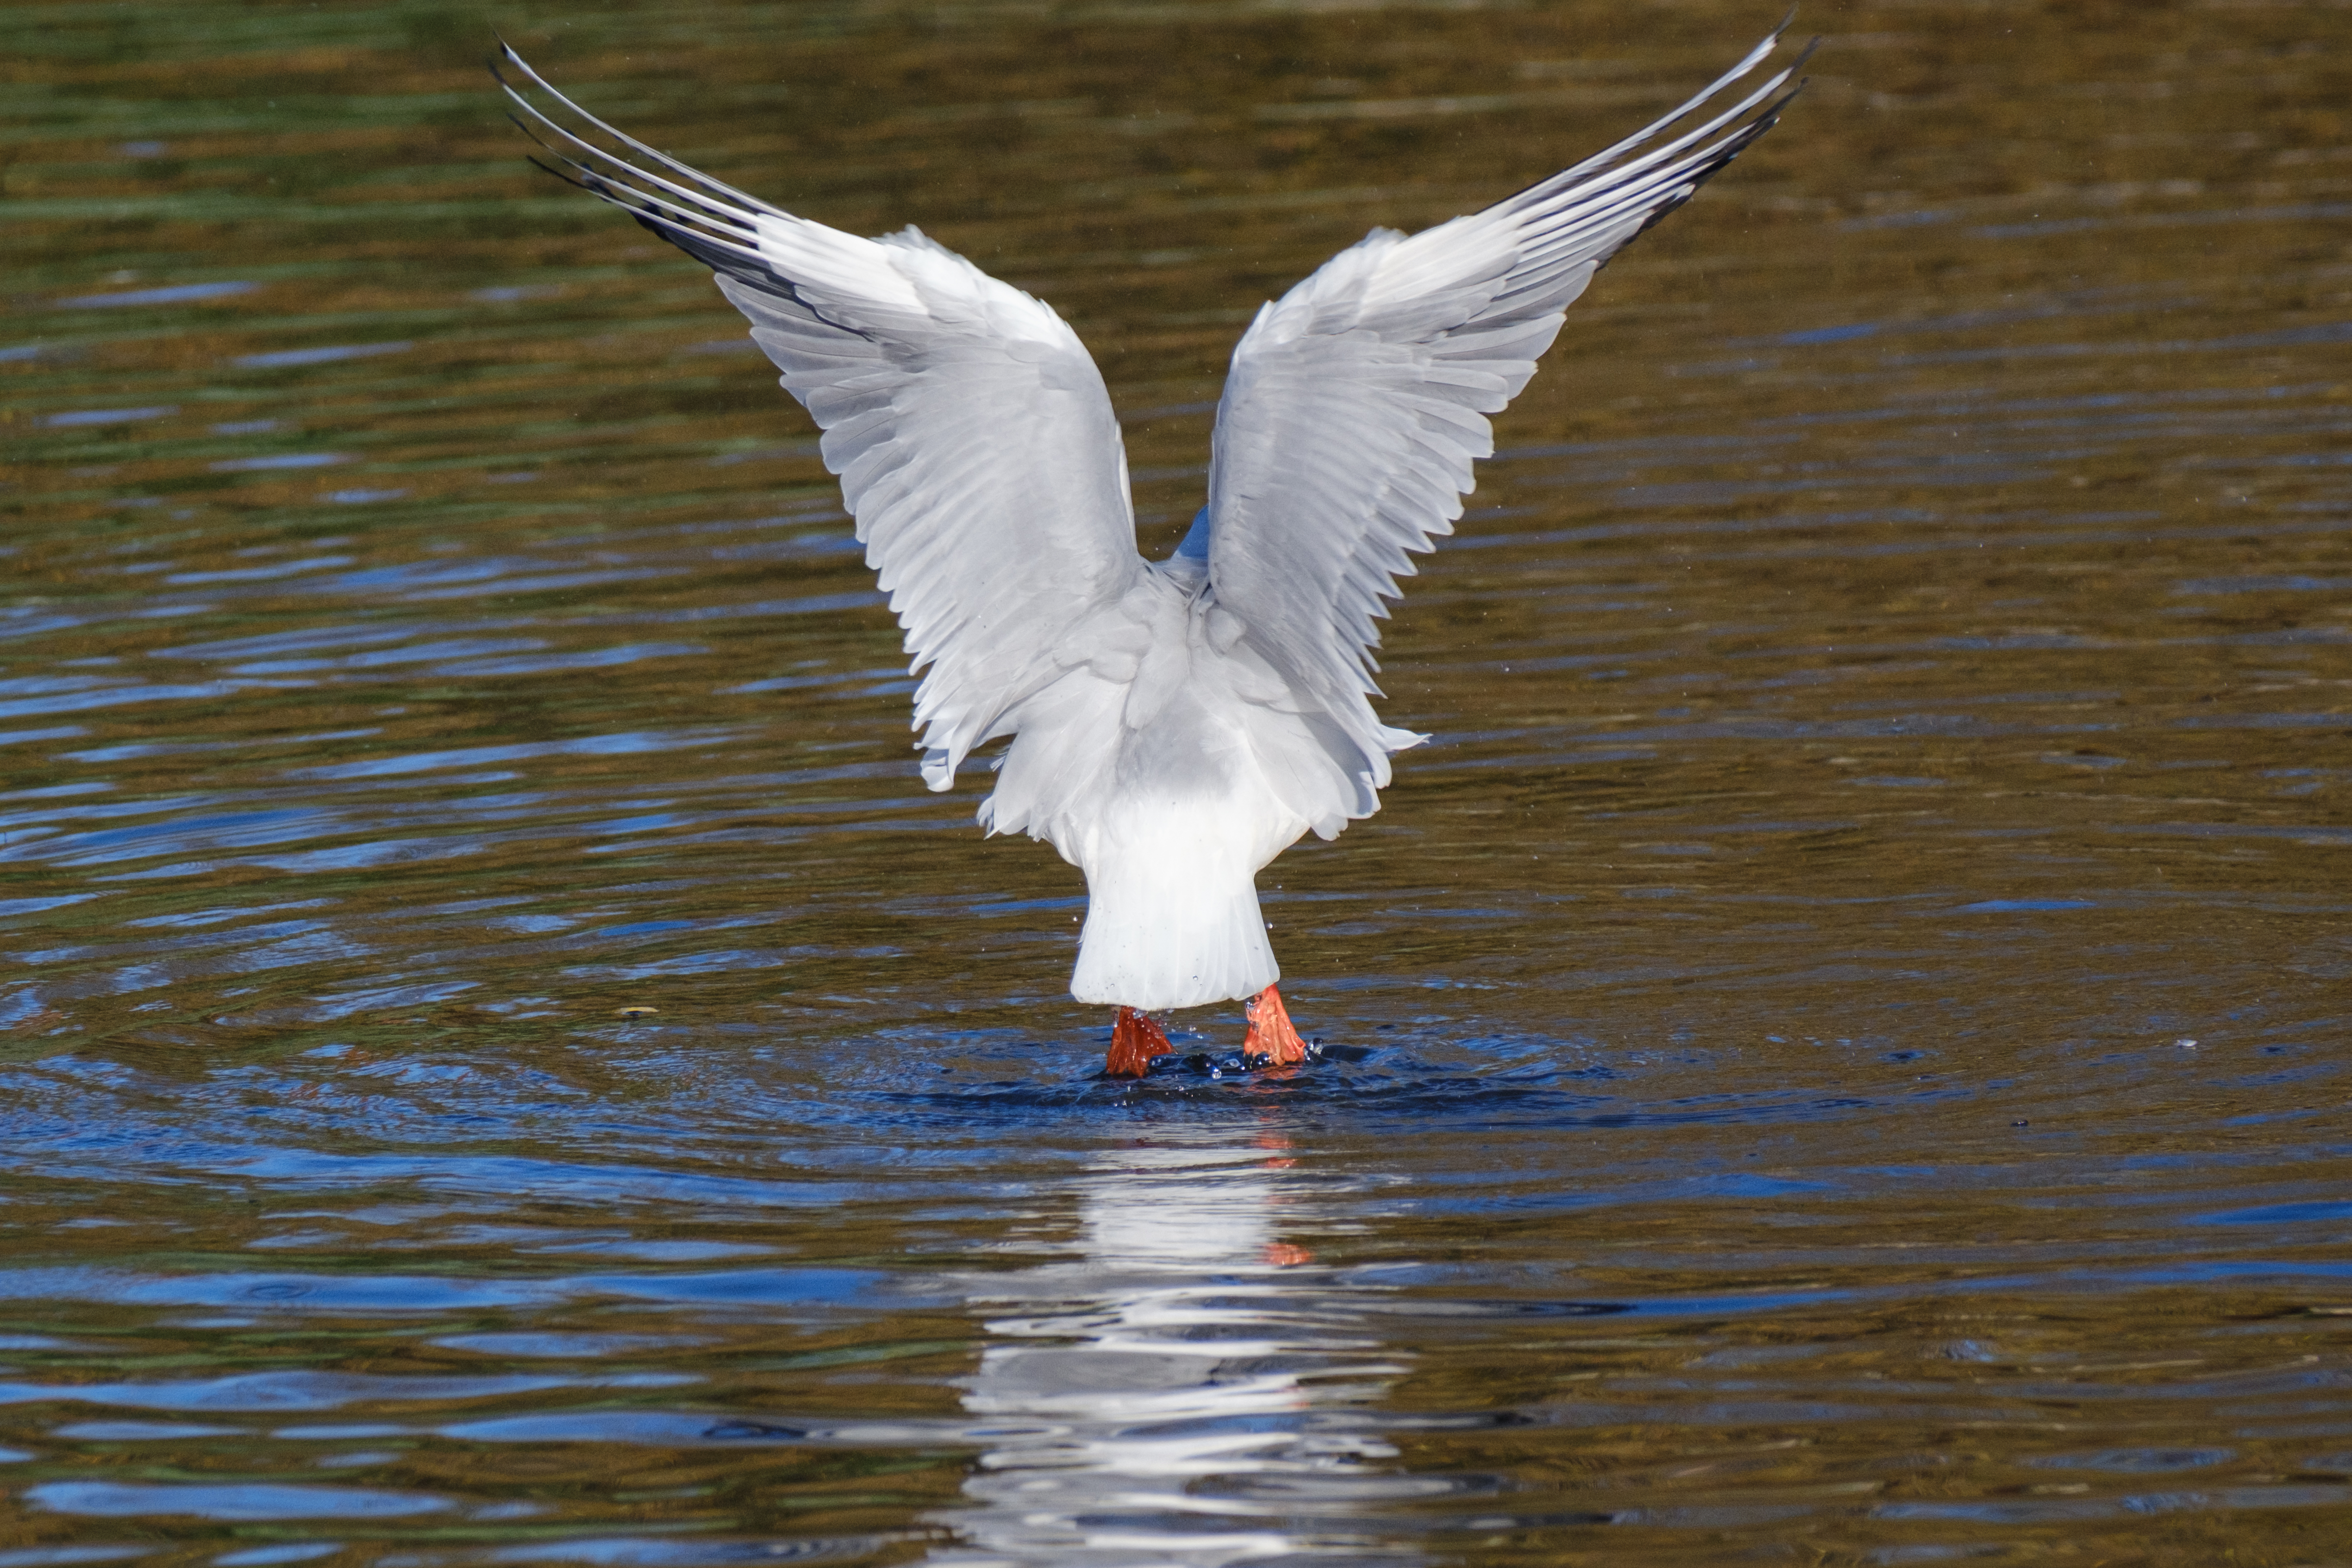 Fujifilm X-T5 gull touchdown sample image, a white bird landing on water